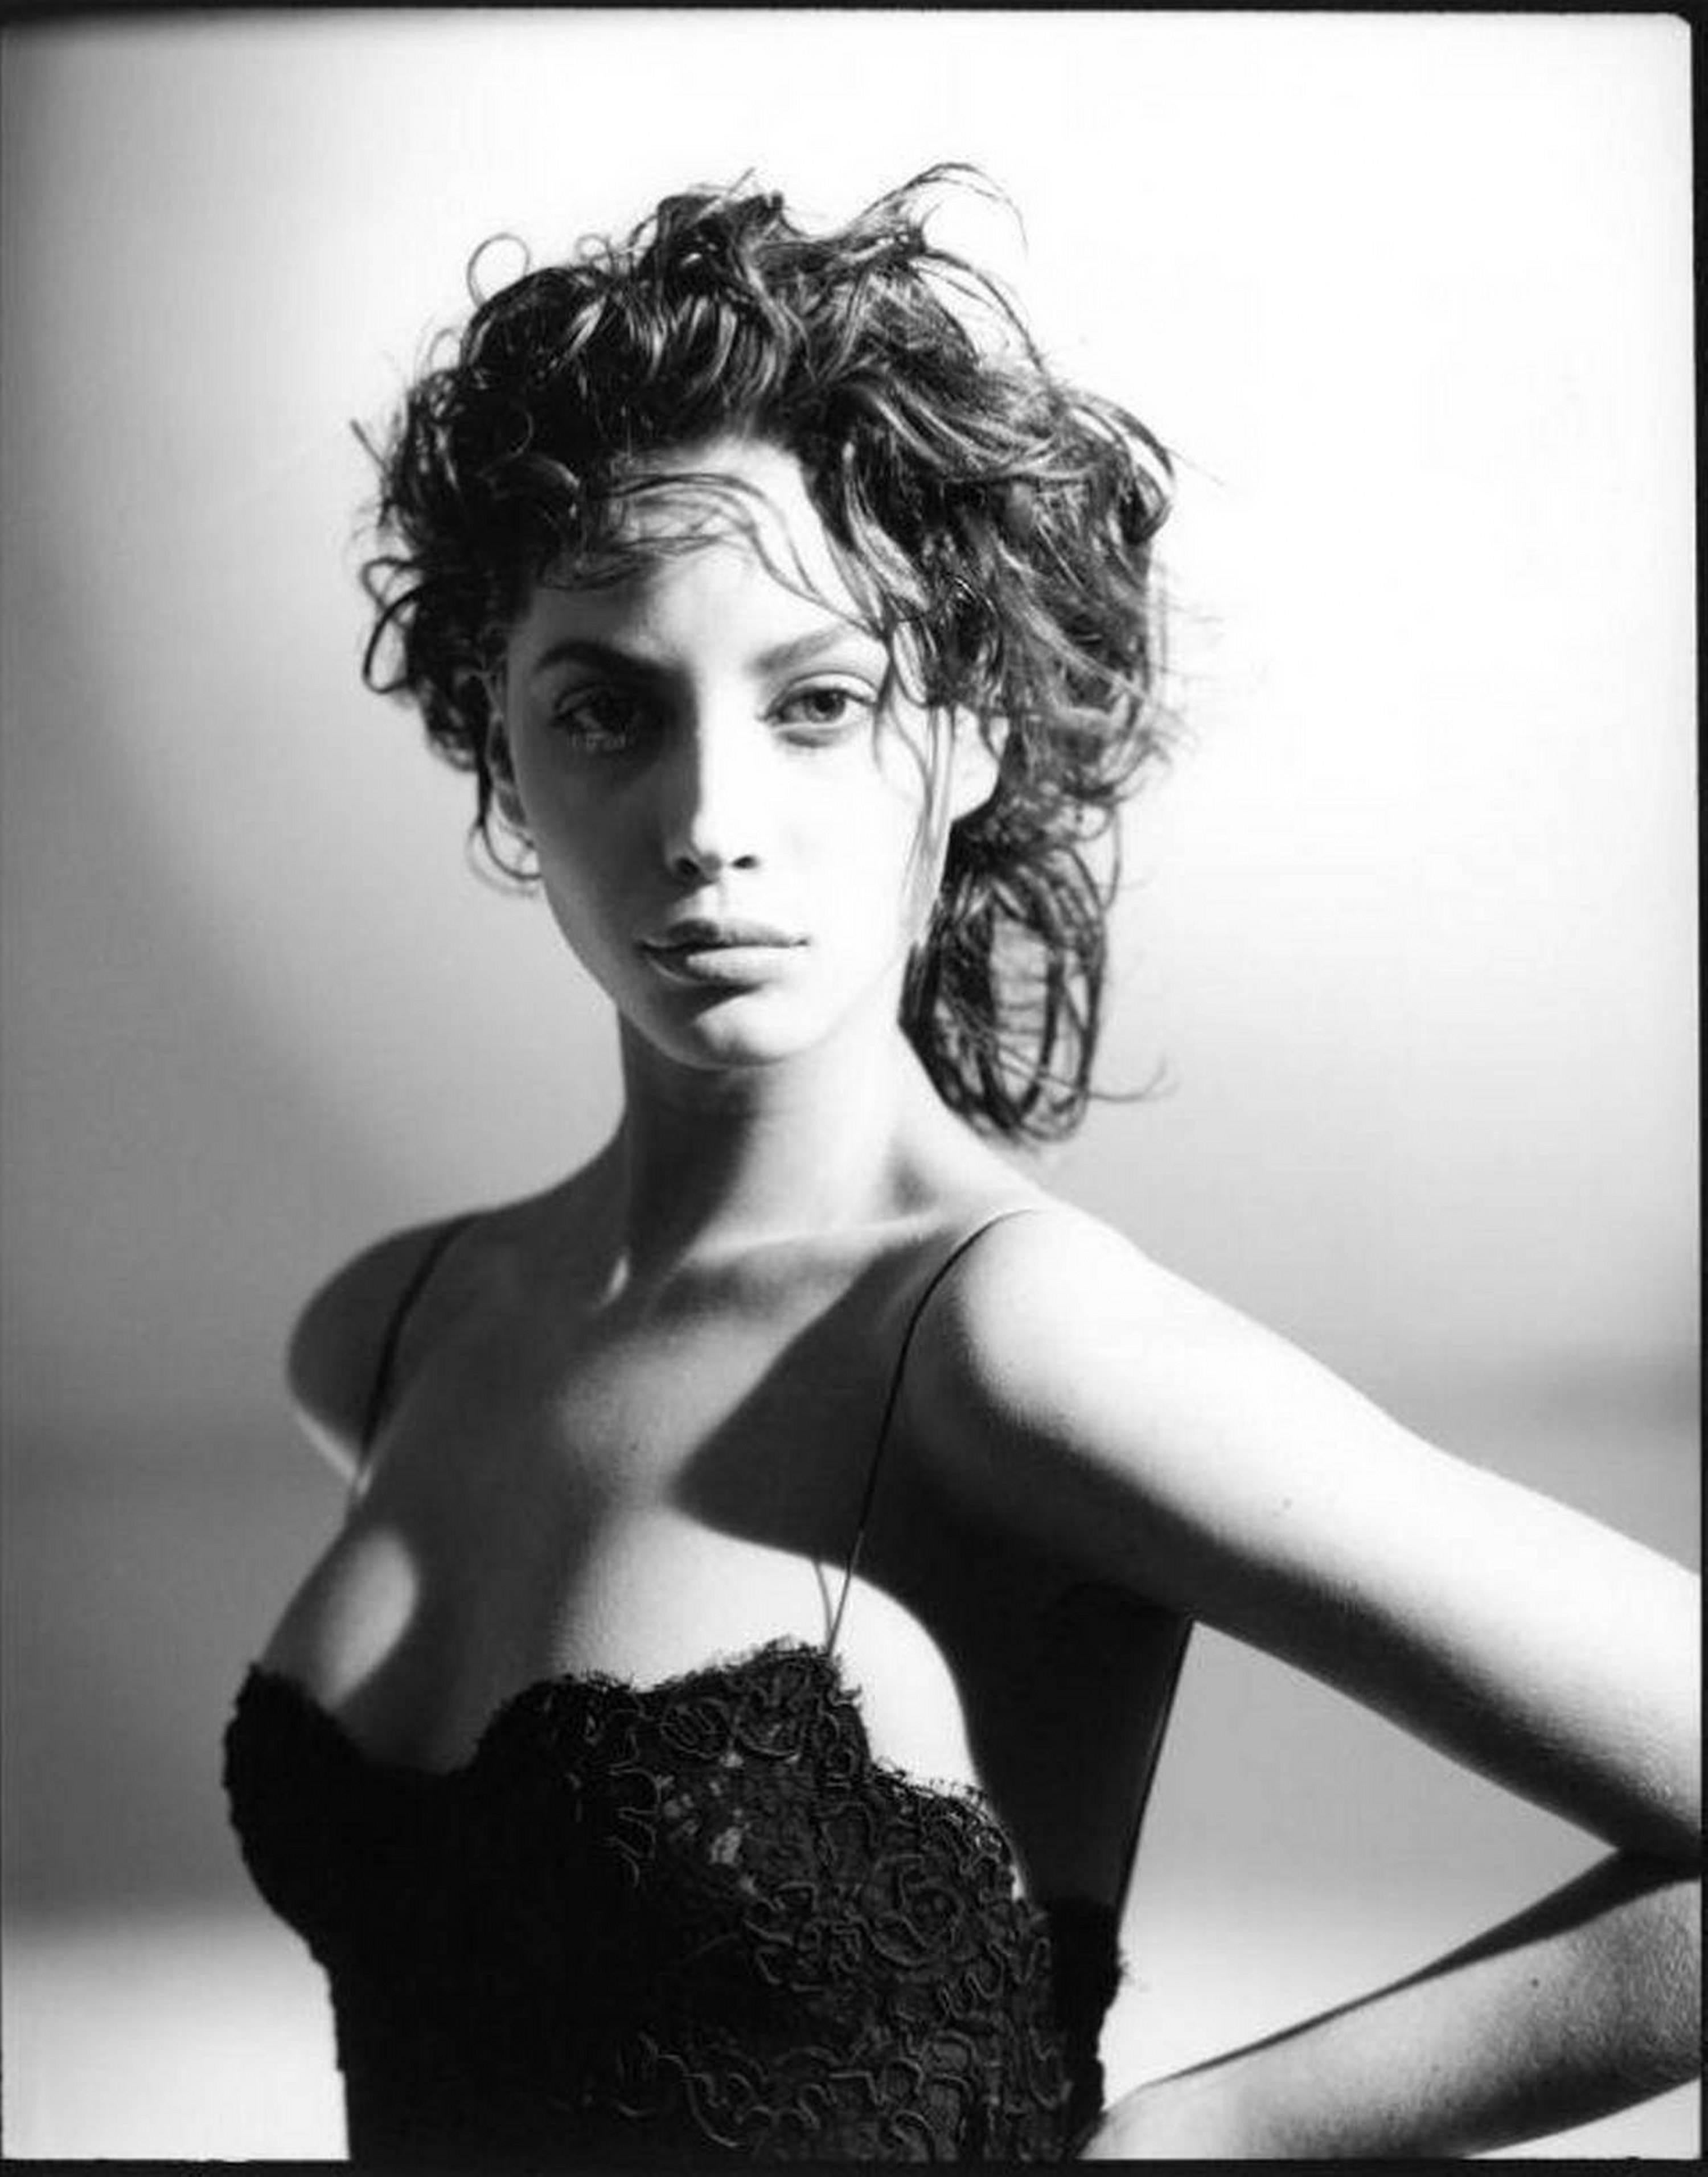 Christy Turlington - b&w portrait in black lace, fine art photography, 1987